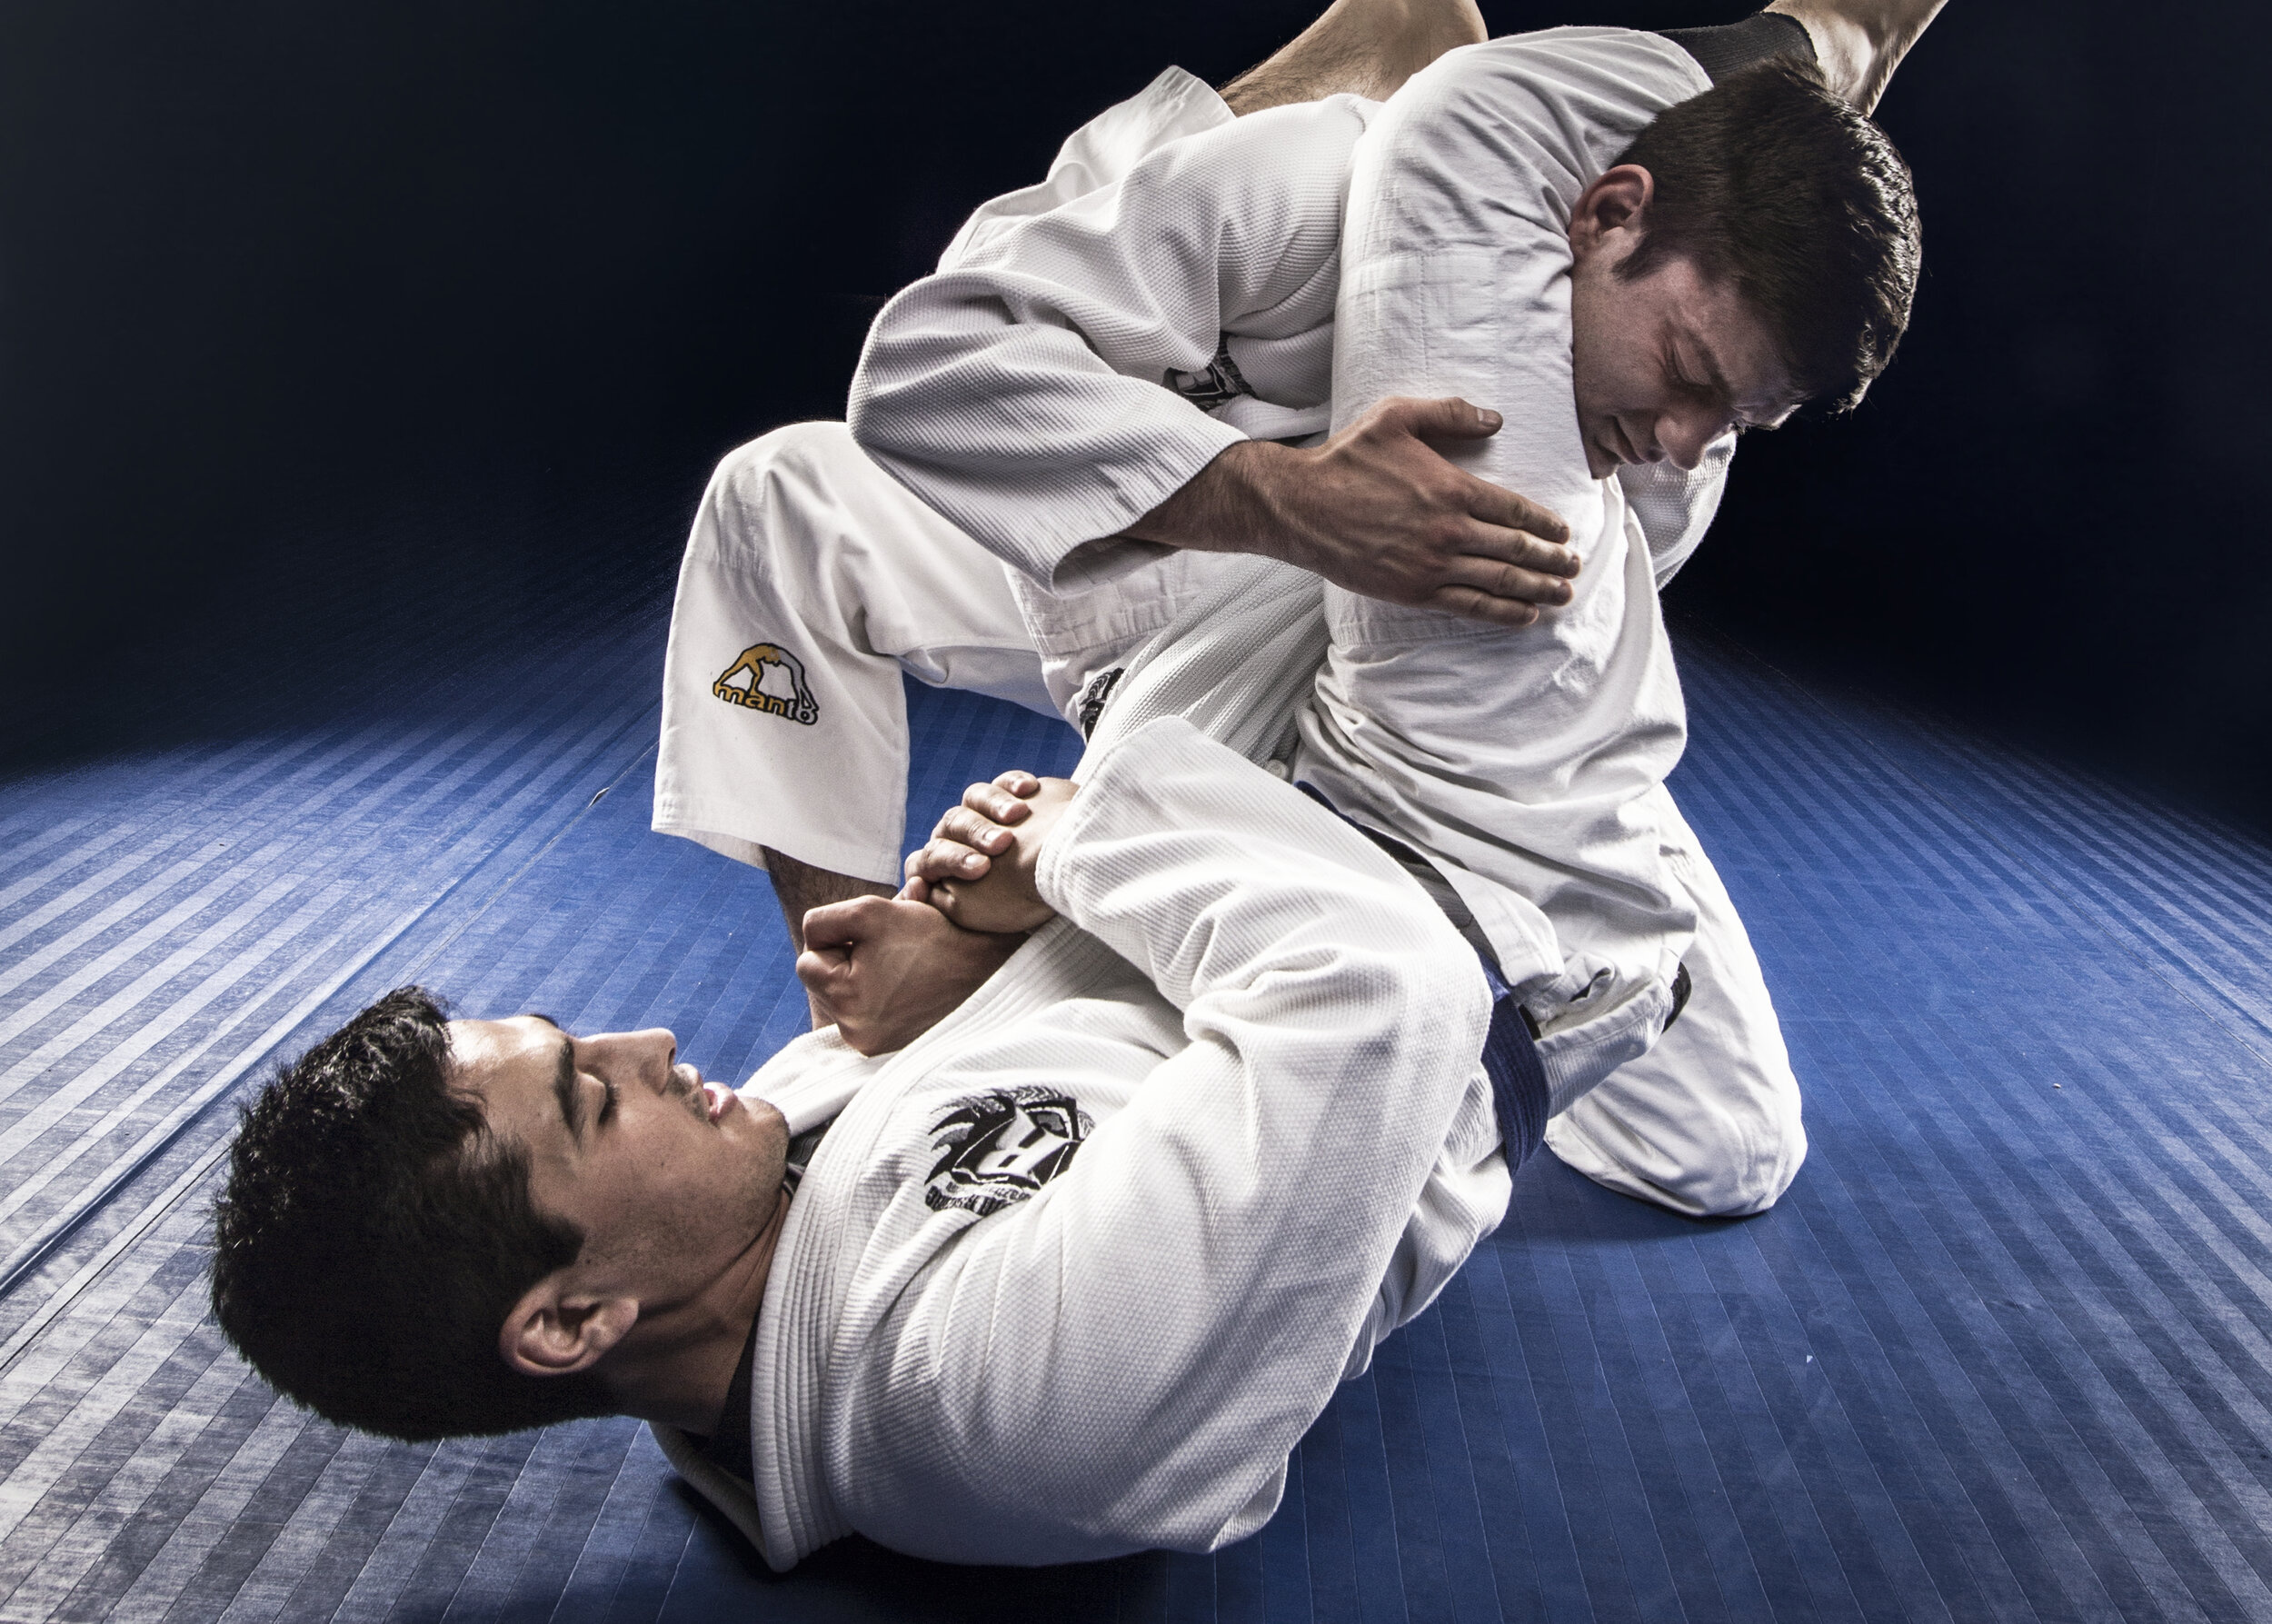 Brazilian Jiu-jitsu: Downtown Jiu-Jitsu Club, Chicago Martial Arts Classes, Development of Striking, Wrestling, and Submission Grappling ability. 2500x1790 HD Wallpaper.